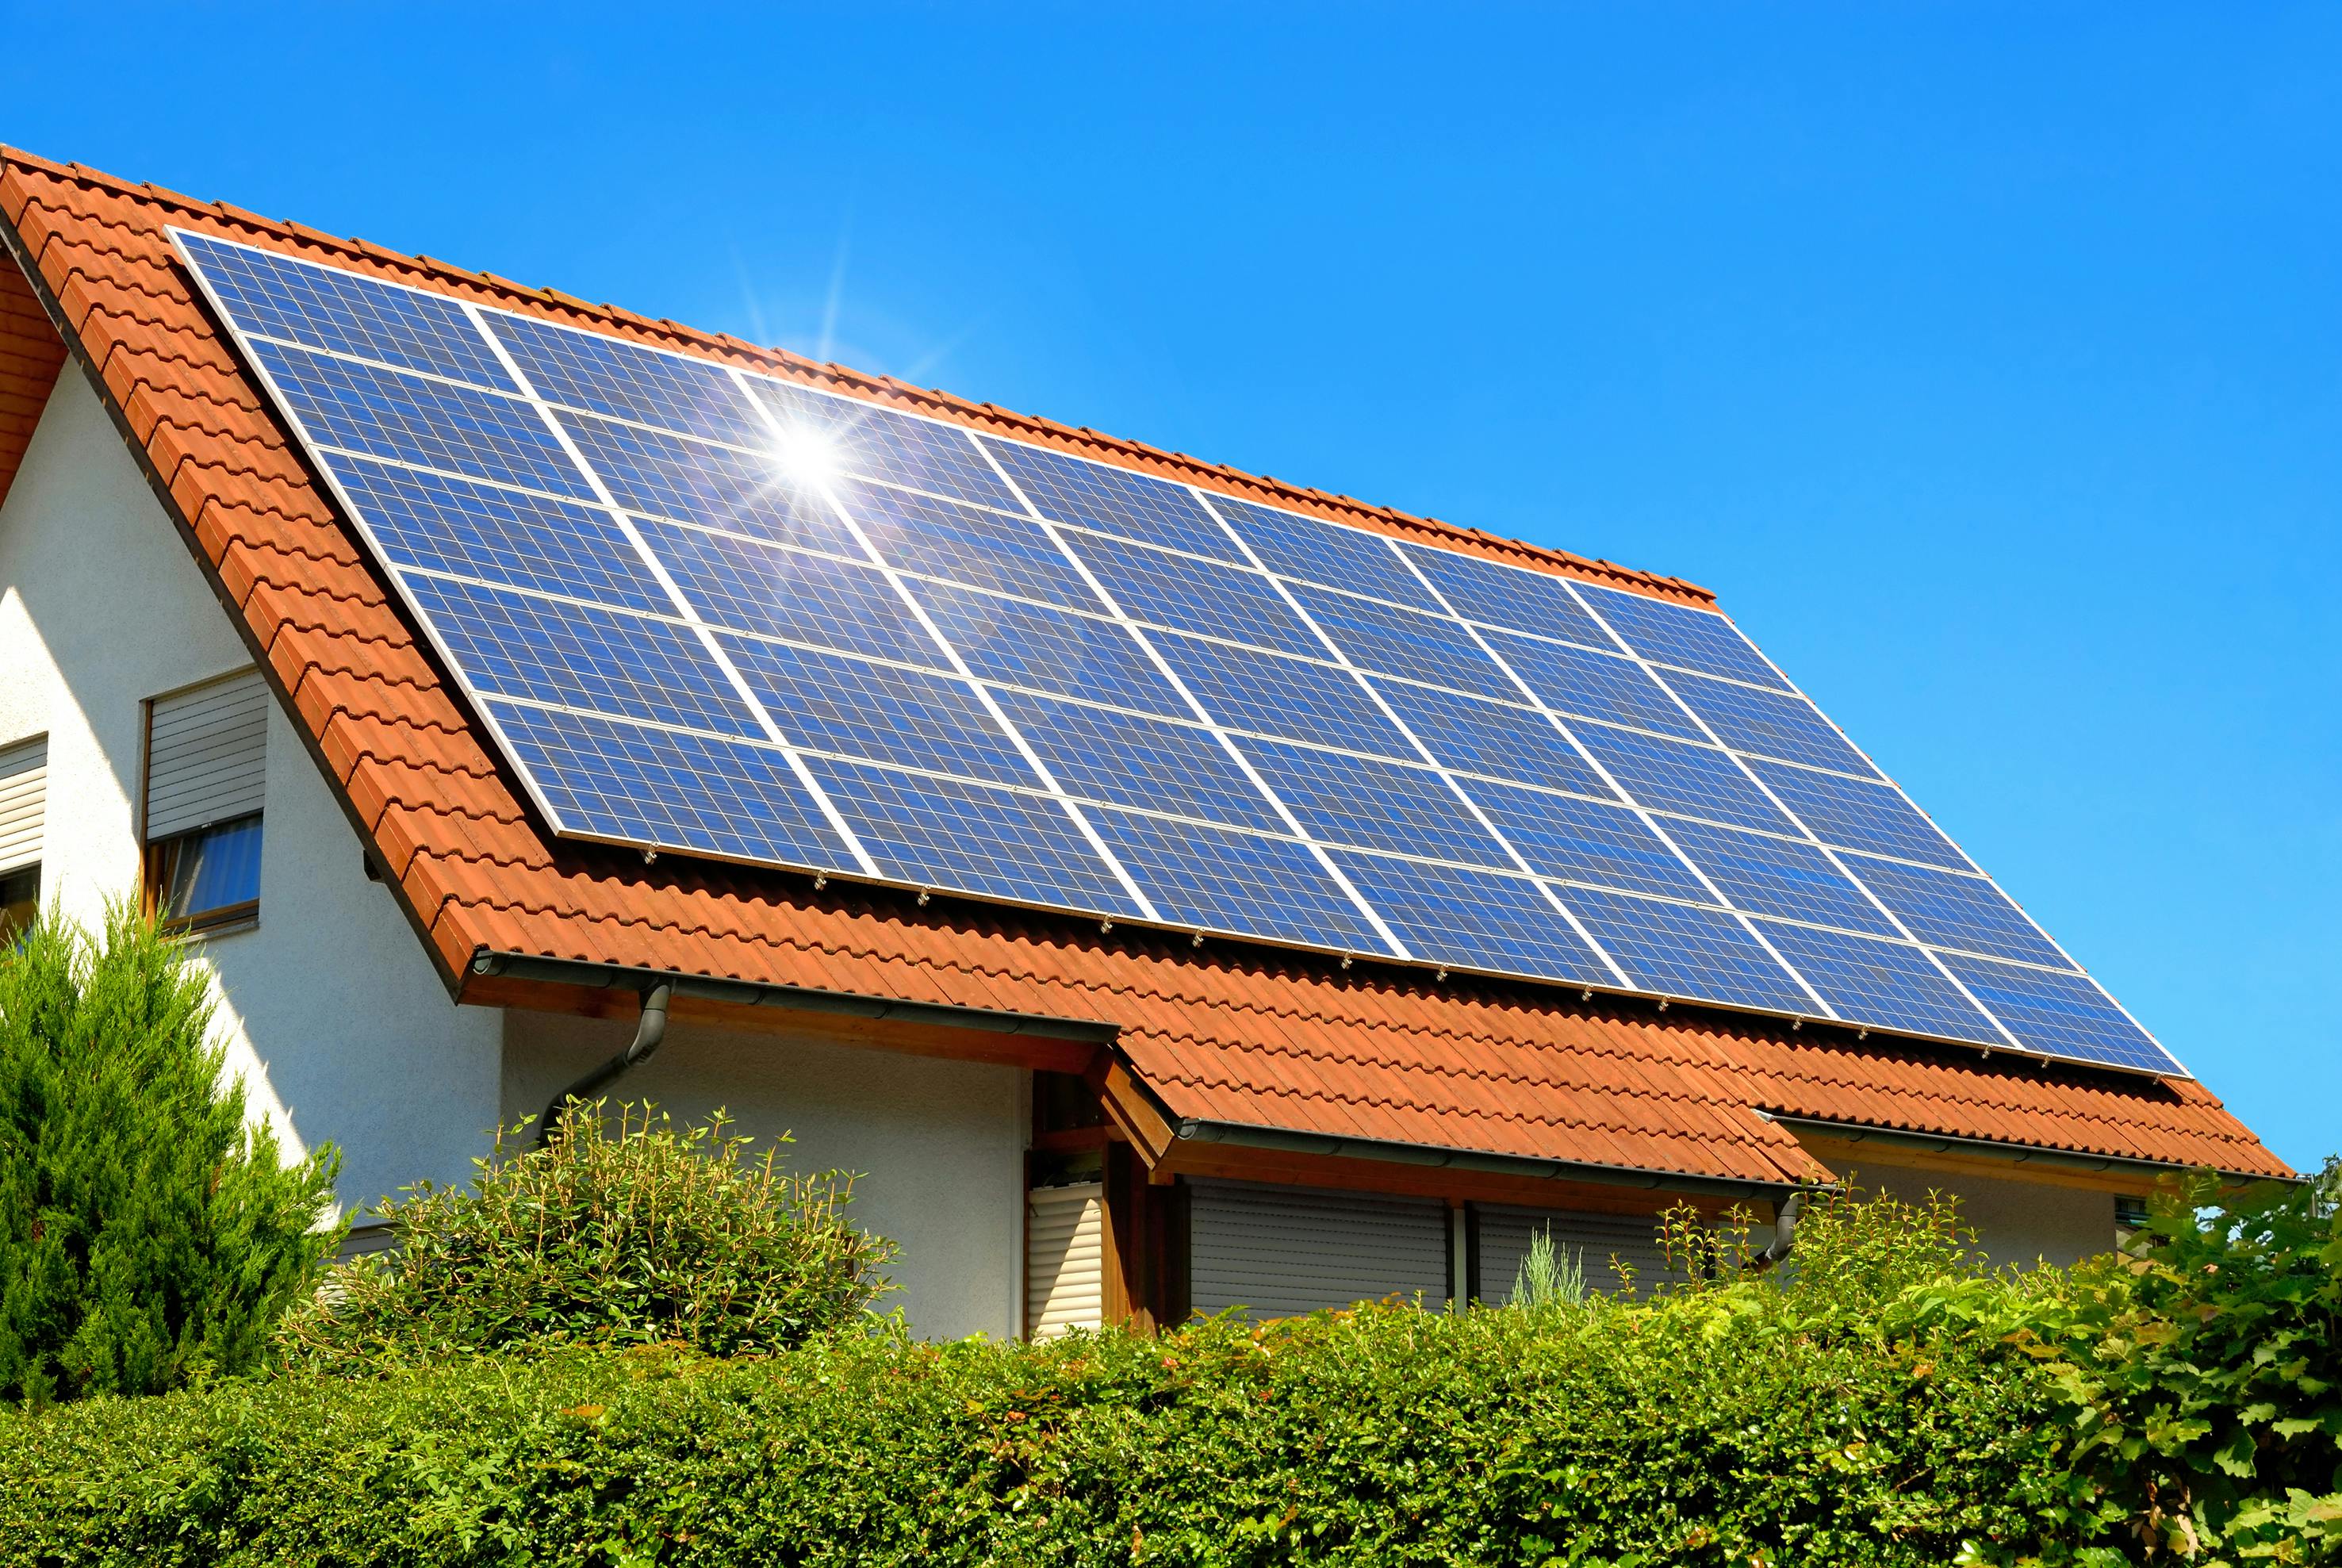 Panel solar fotovoltaico en instalación residencial